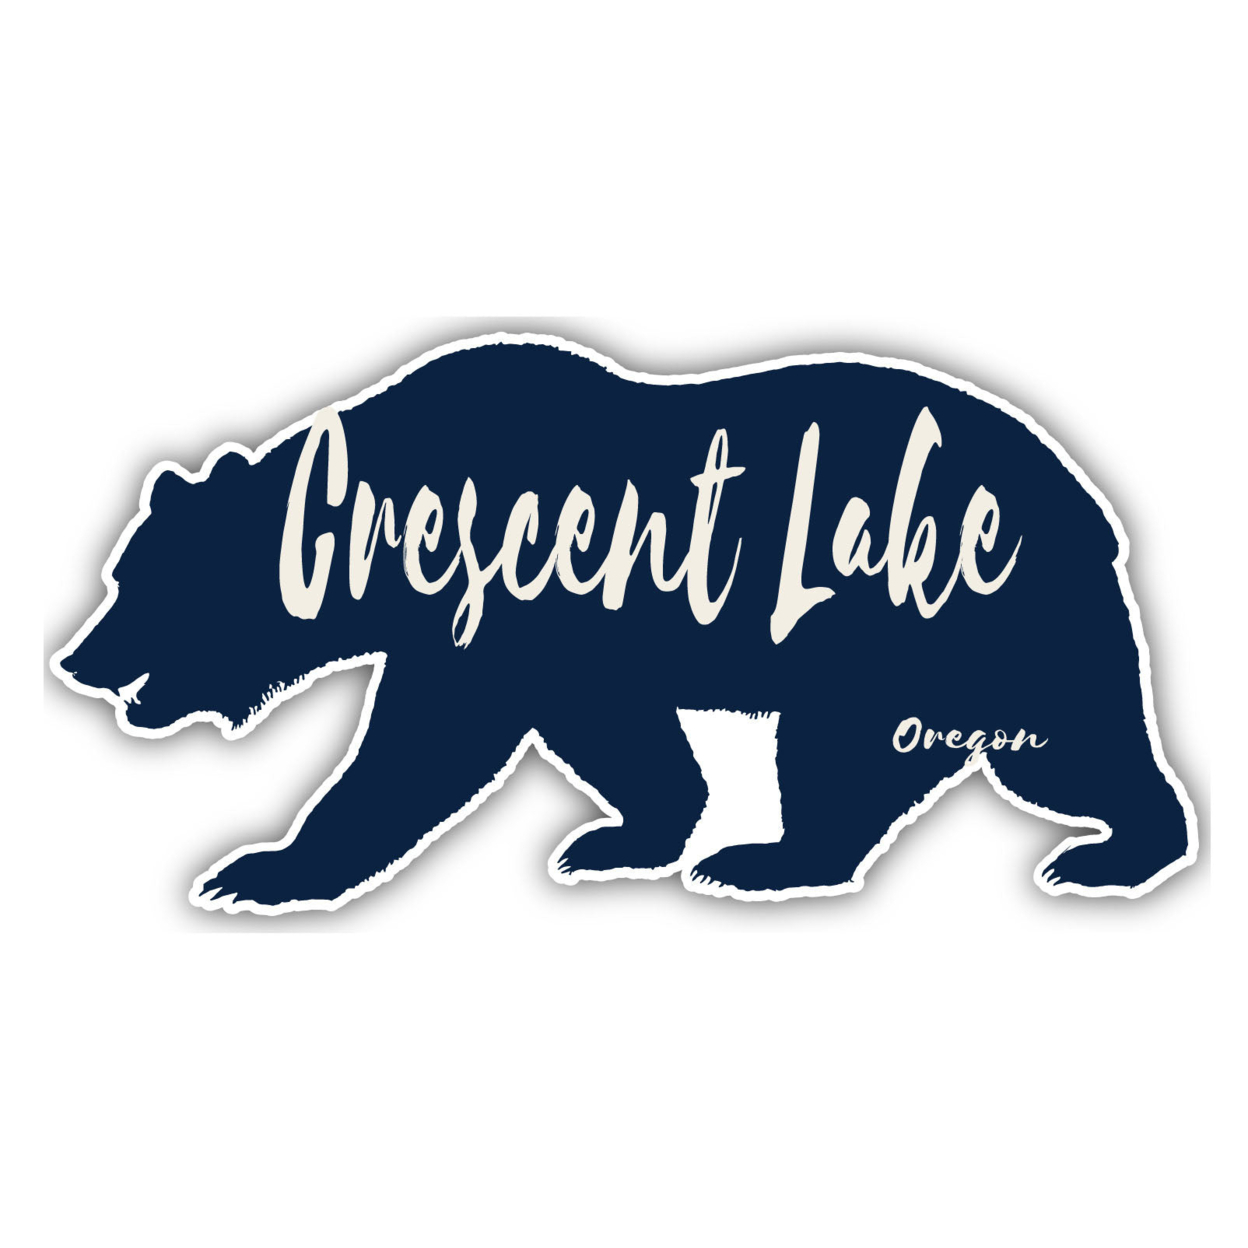 Crescent Lake Oregon Souvenir Decorative Stickers (Choose Theme And Size) - 4-Pack, 12-Inch, Bear